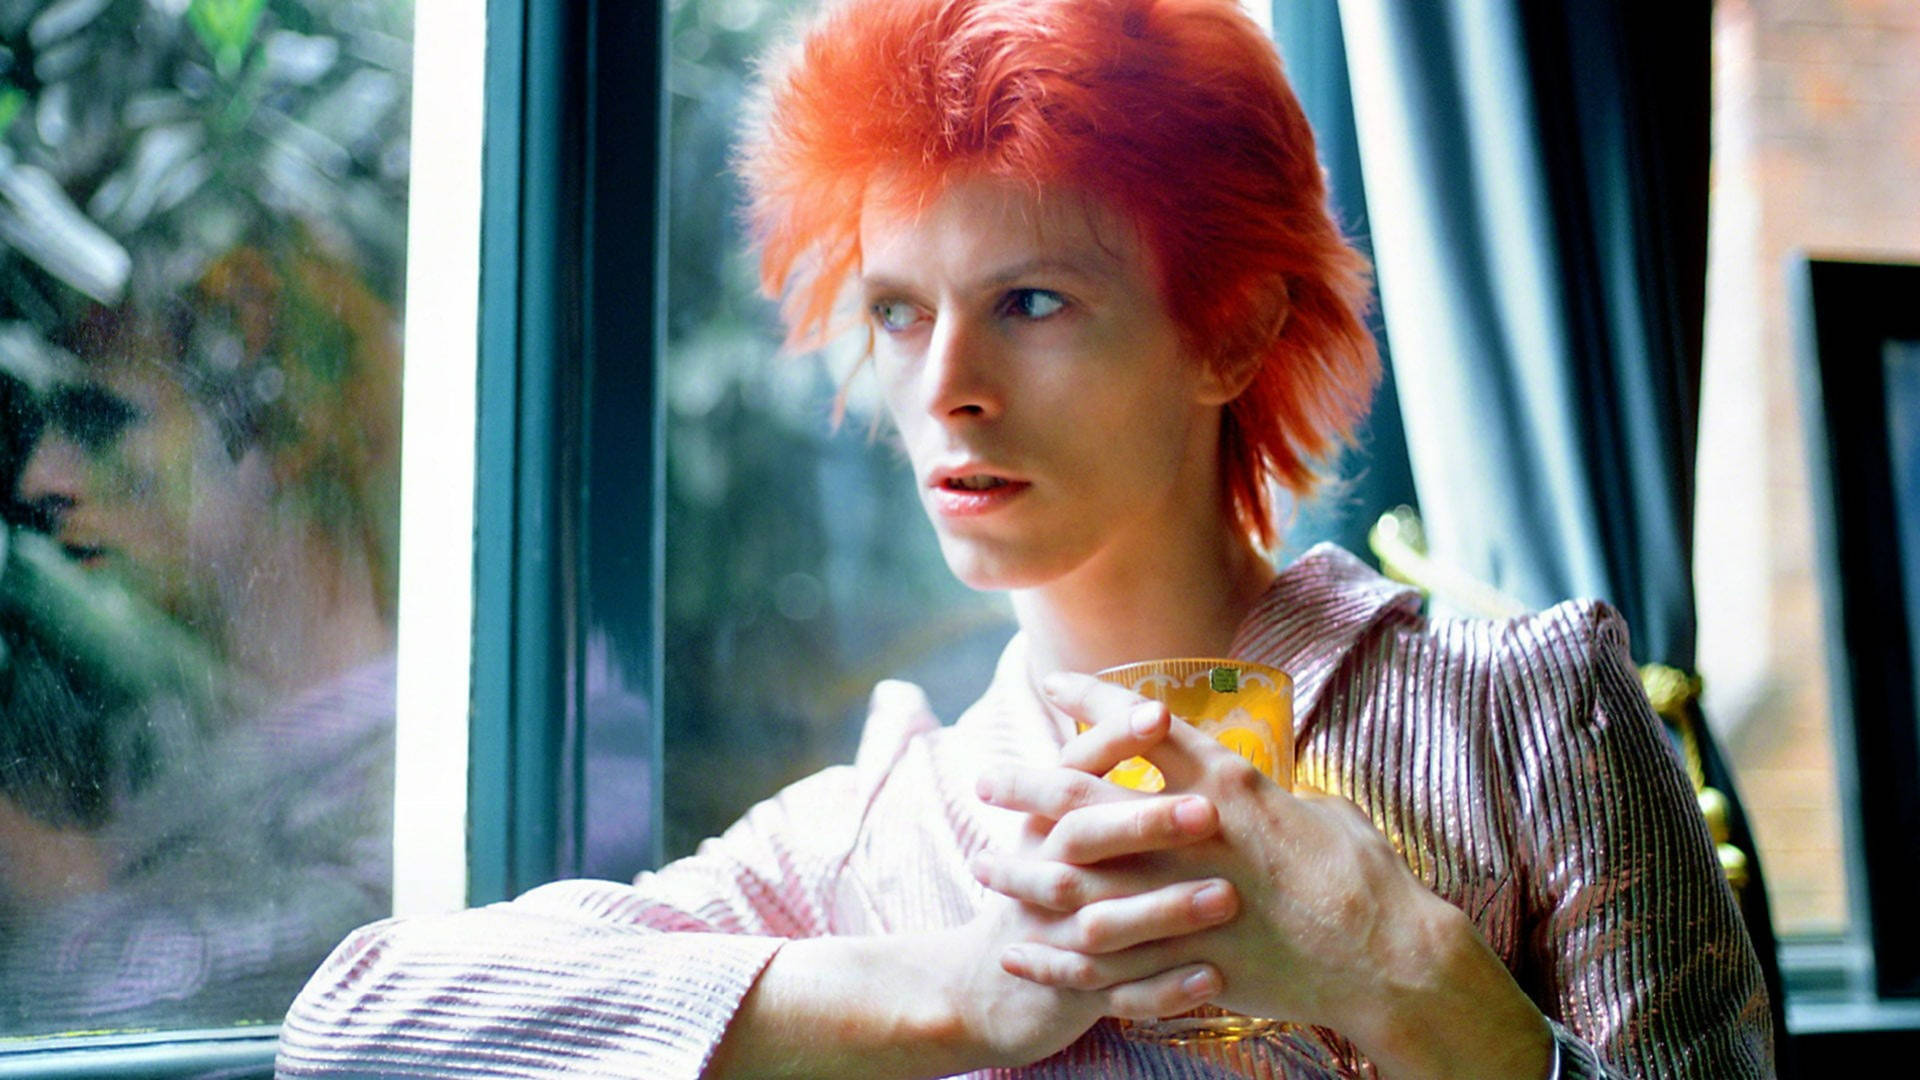 David Bowie With Orange Hair Wallpaper